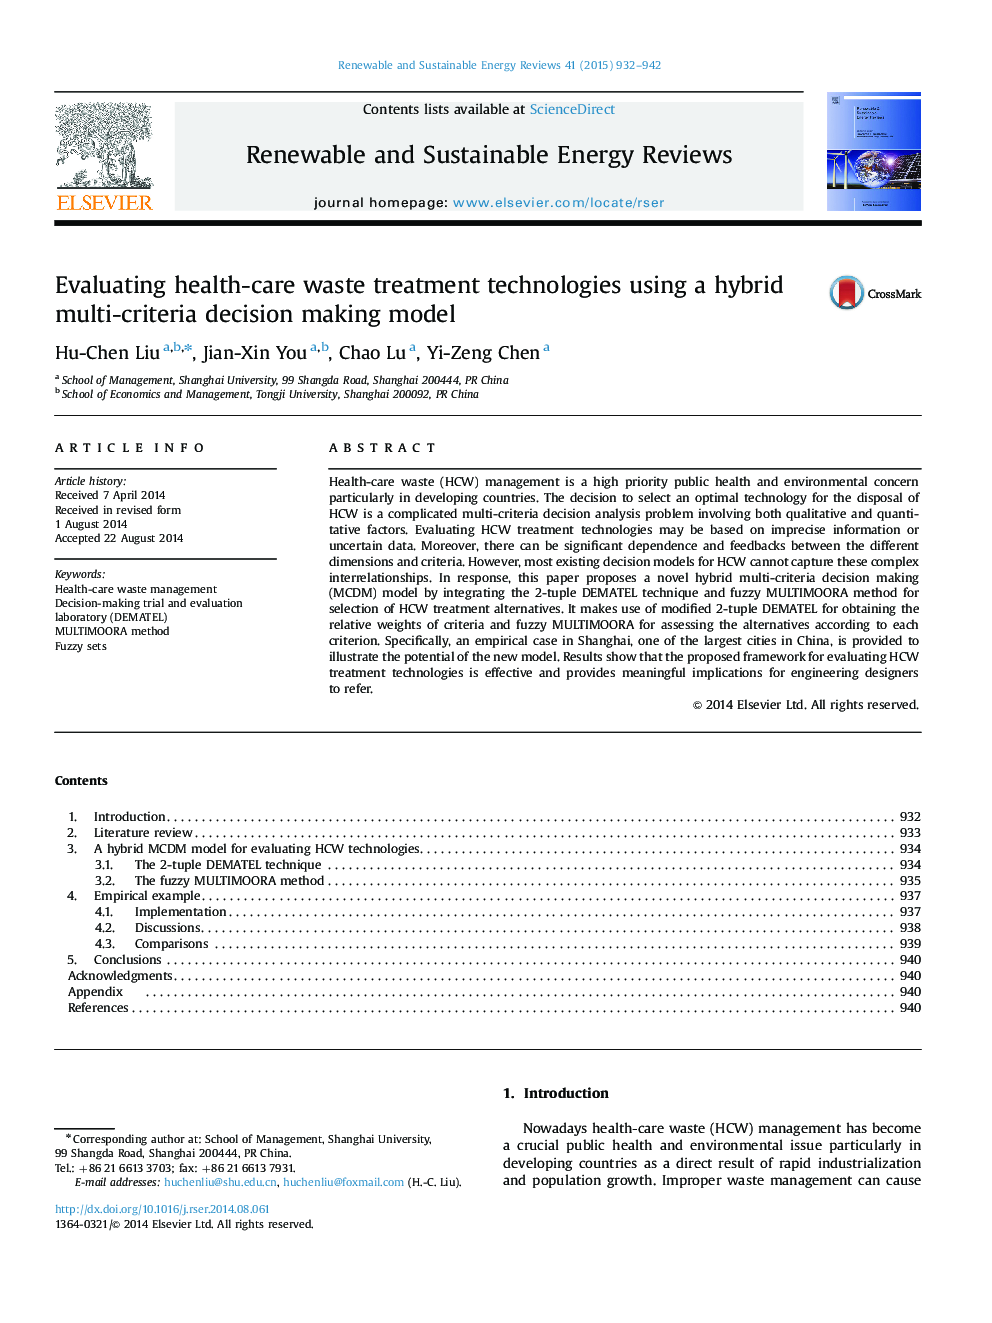 Evaluating health-care waste treatment technologies using a hybrid multi-criteria decision making model